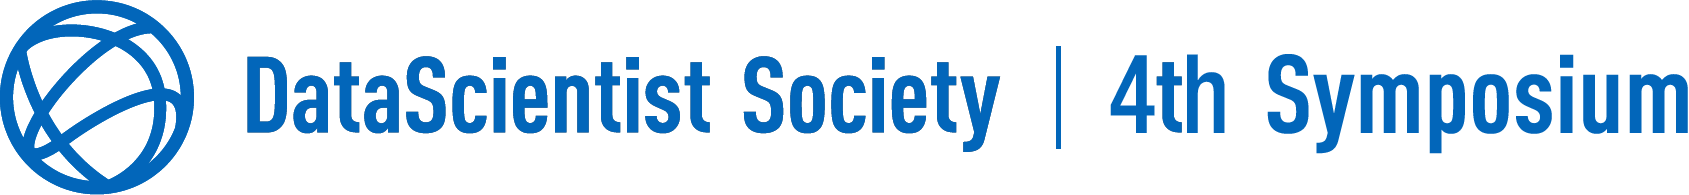 DataScientist Society 4th Symposium